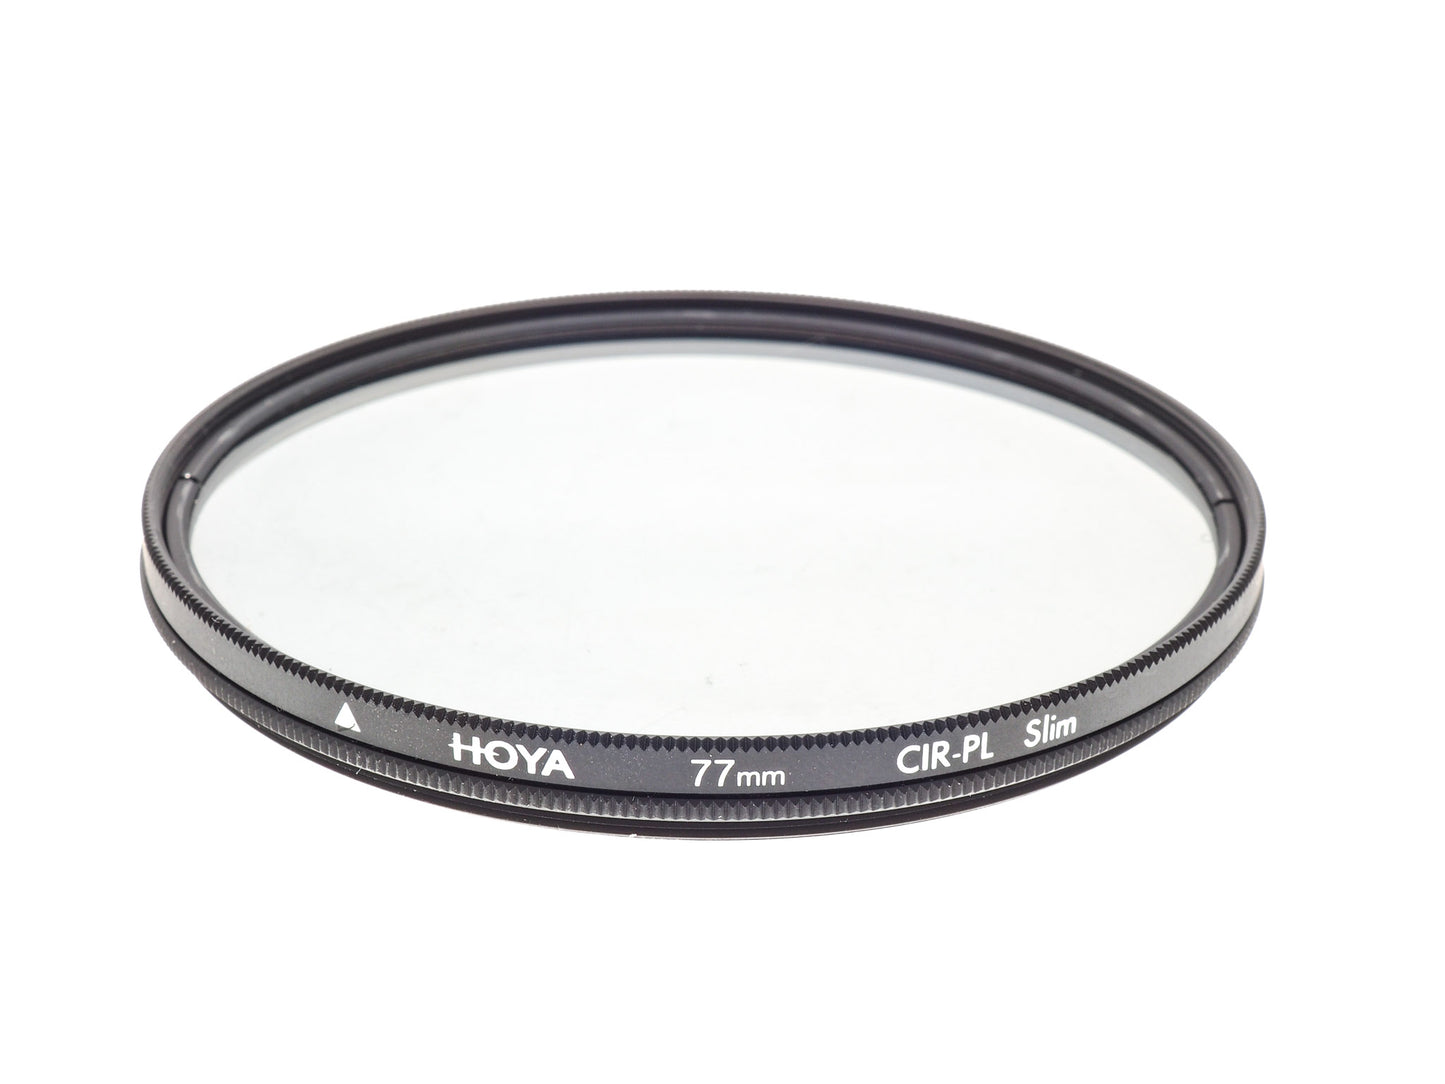 Hoya 77mm Circular Polarizing Filter UX CIR-PL Slim - Accessory